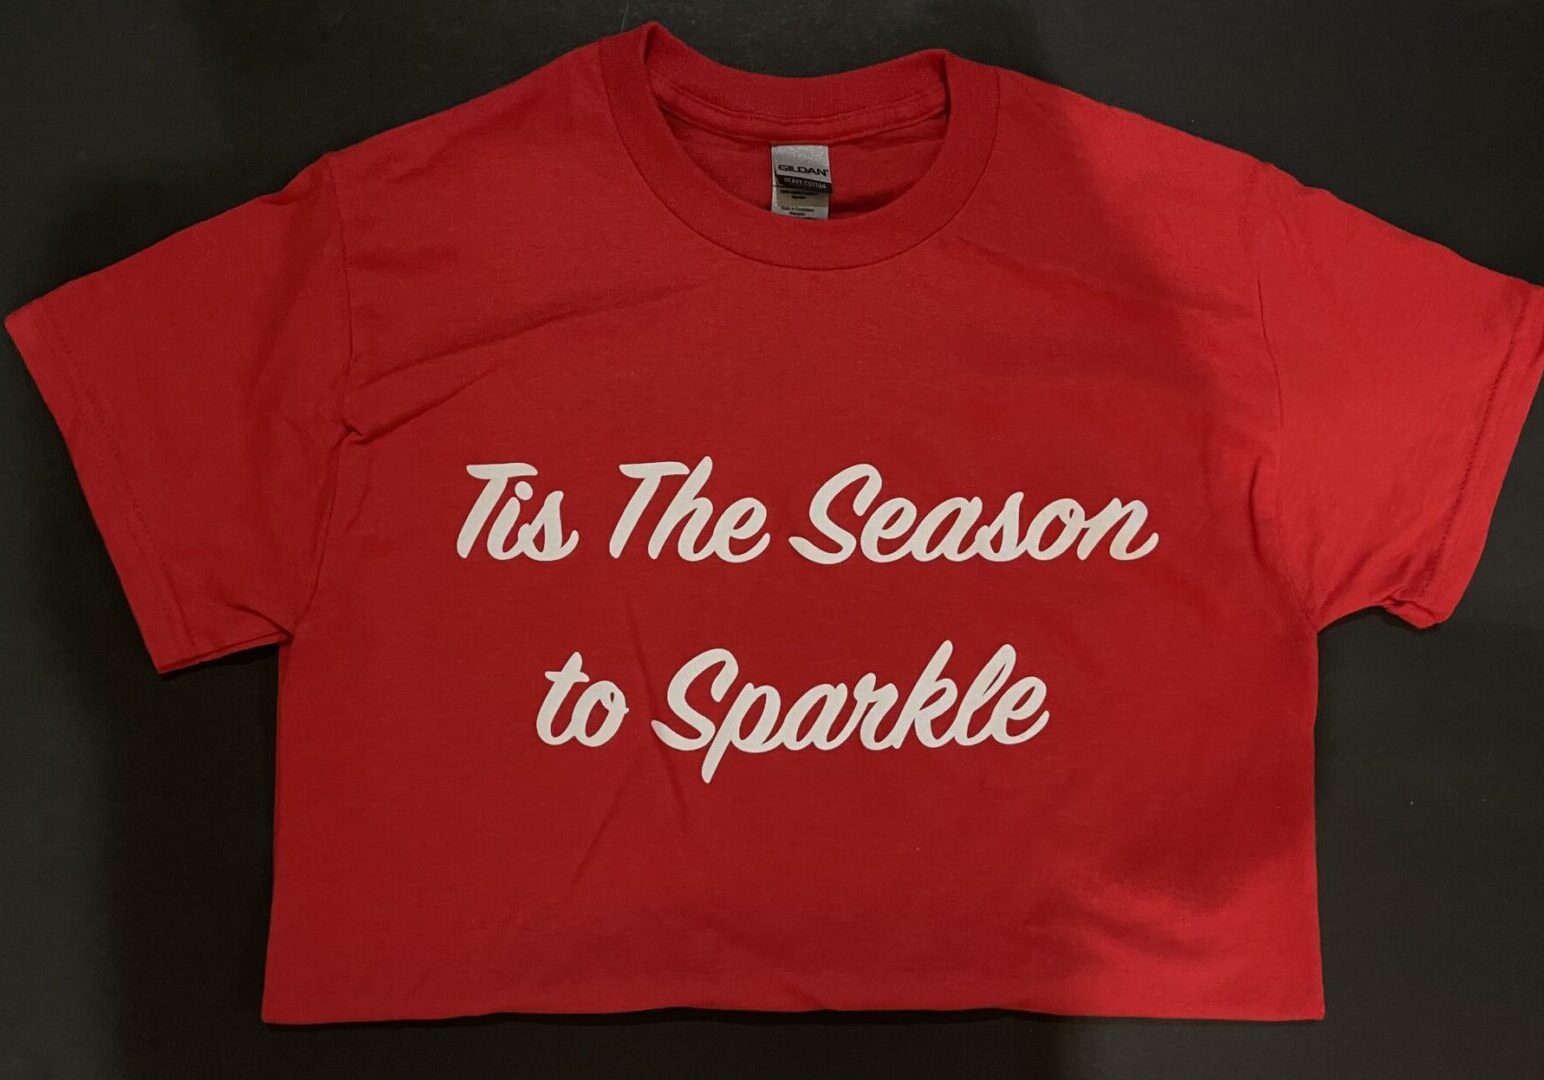 A red shirt that says tis the season to sparkle.